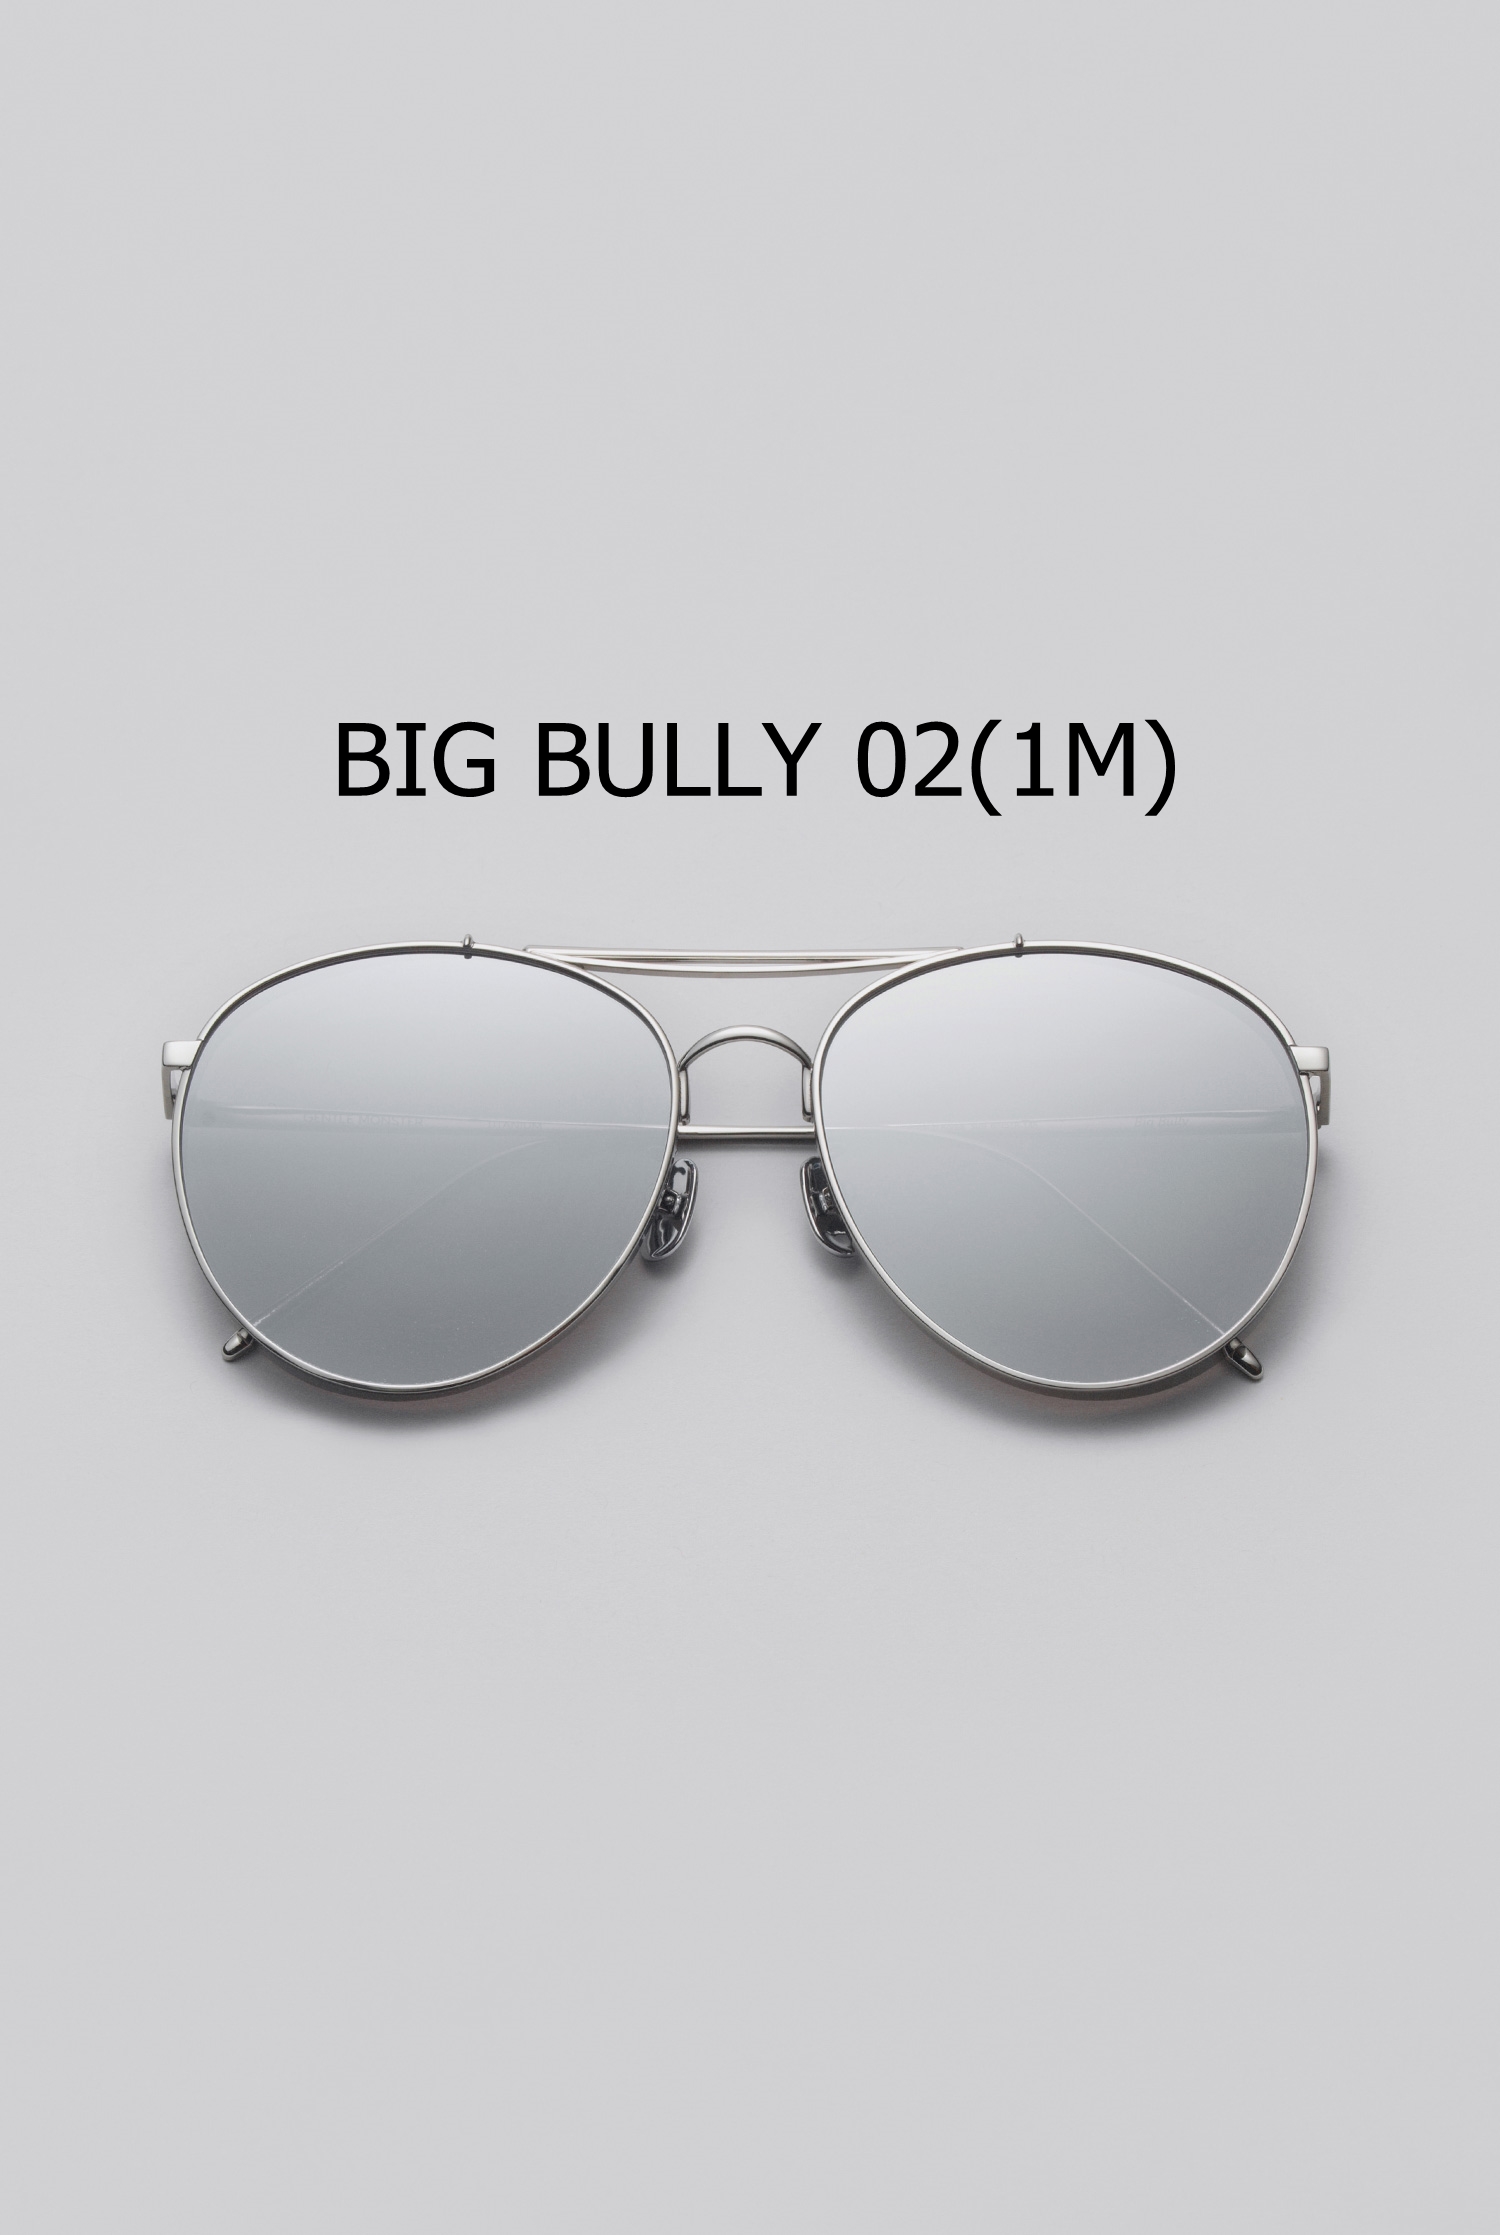 BIG BULLY 02(1M)